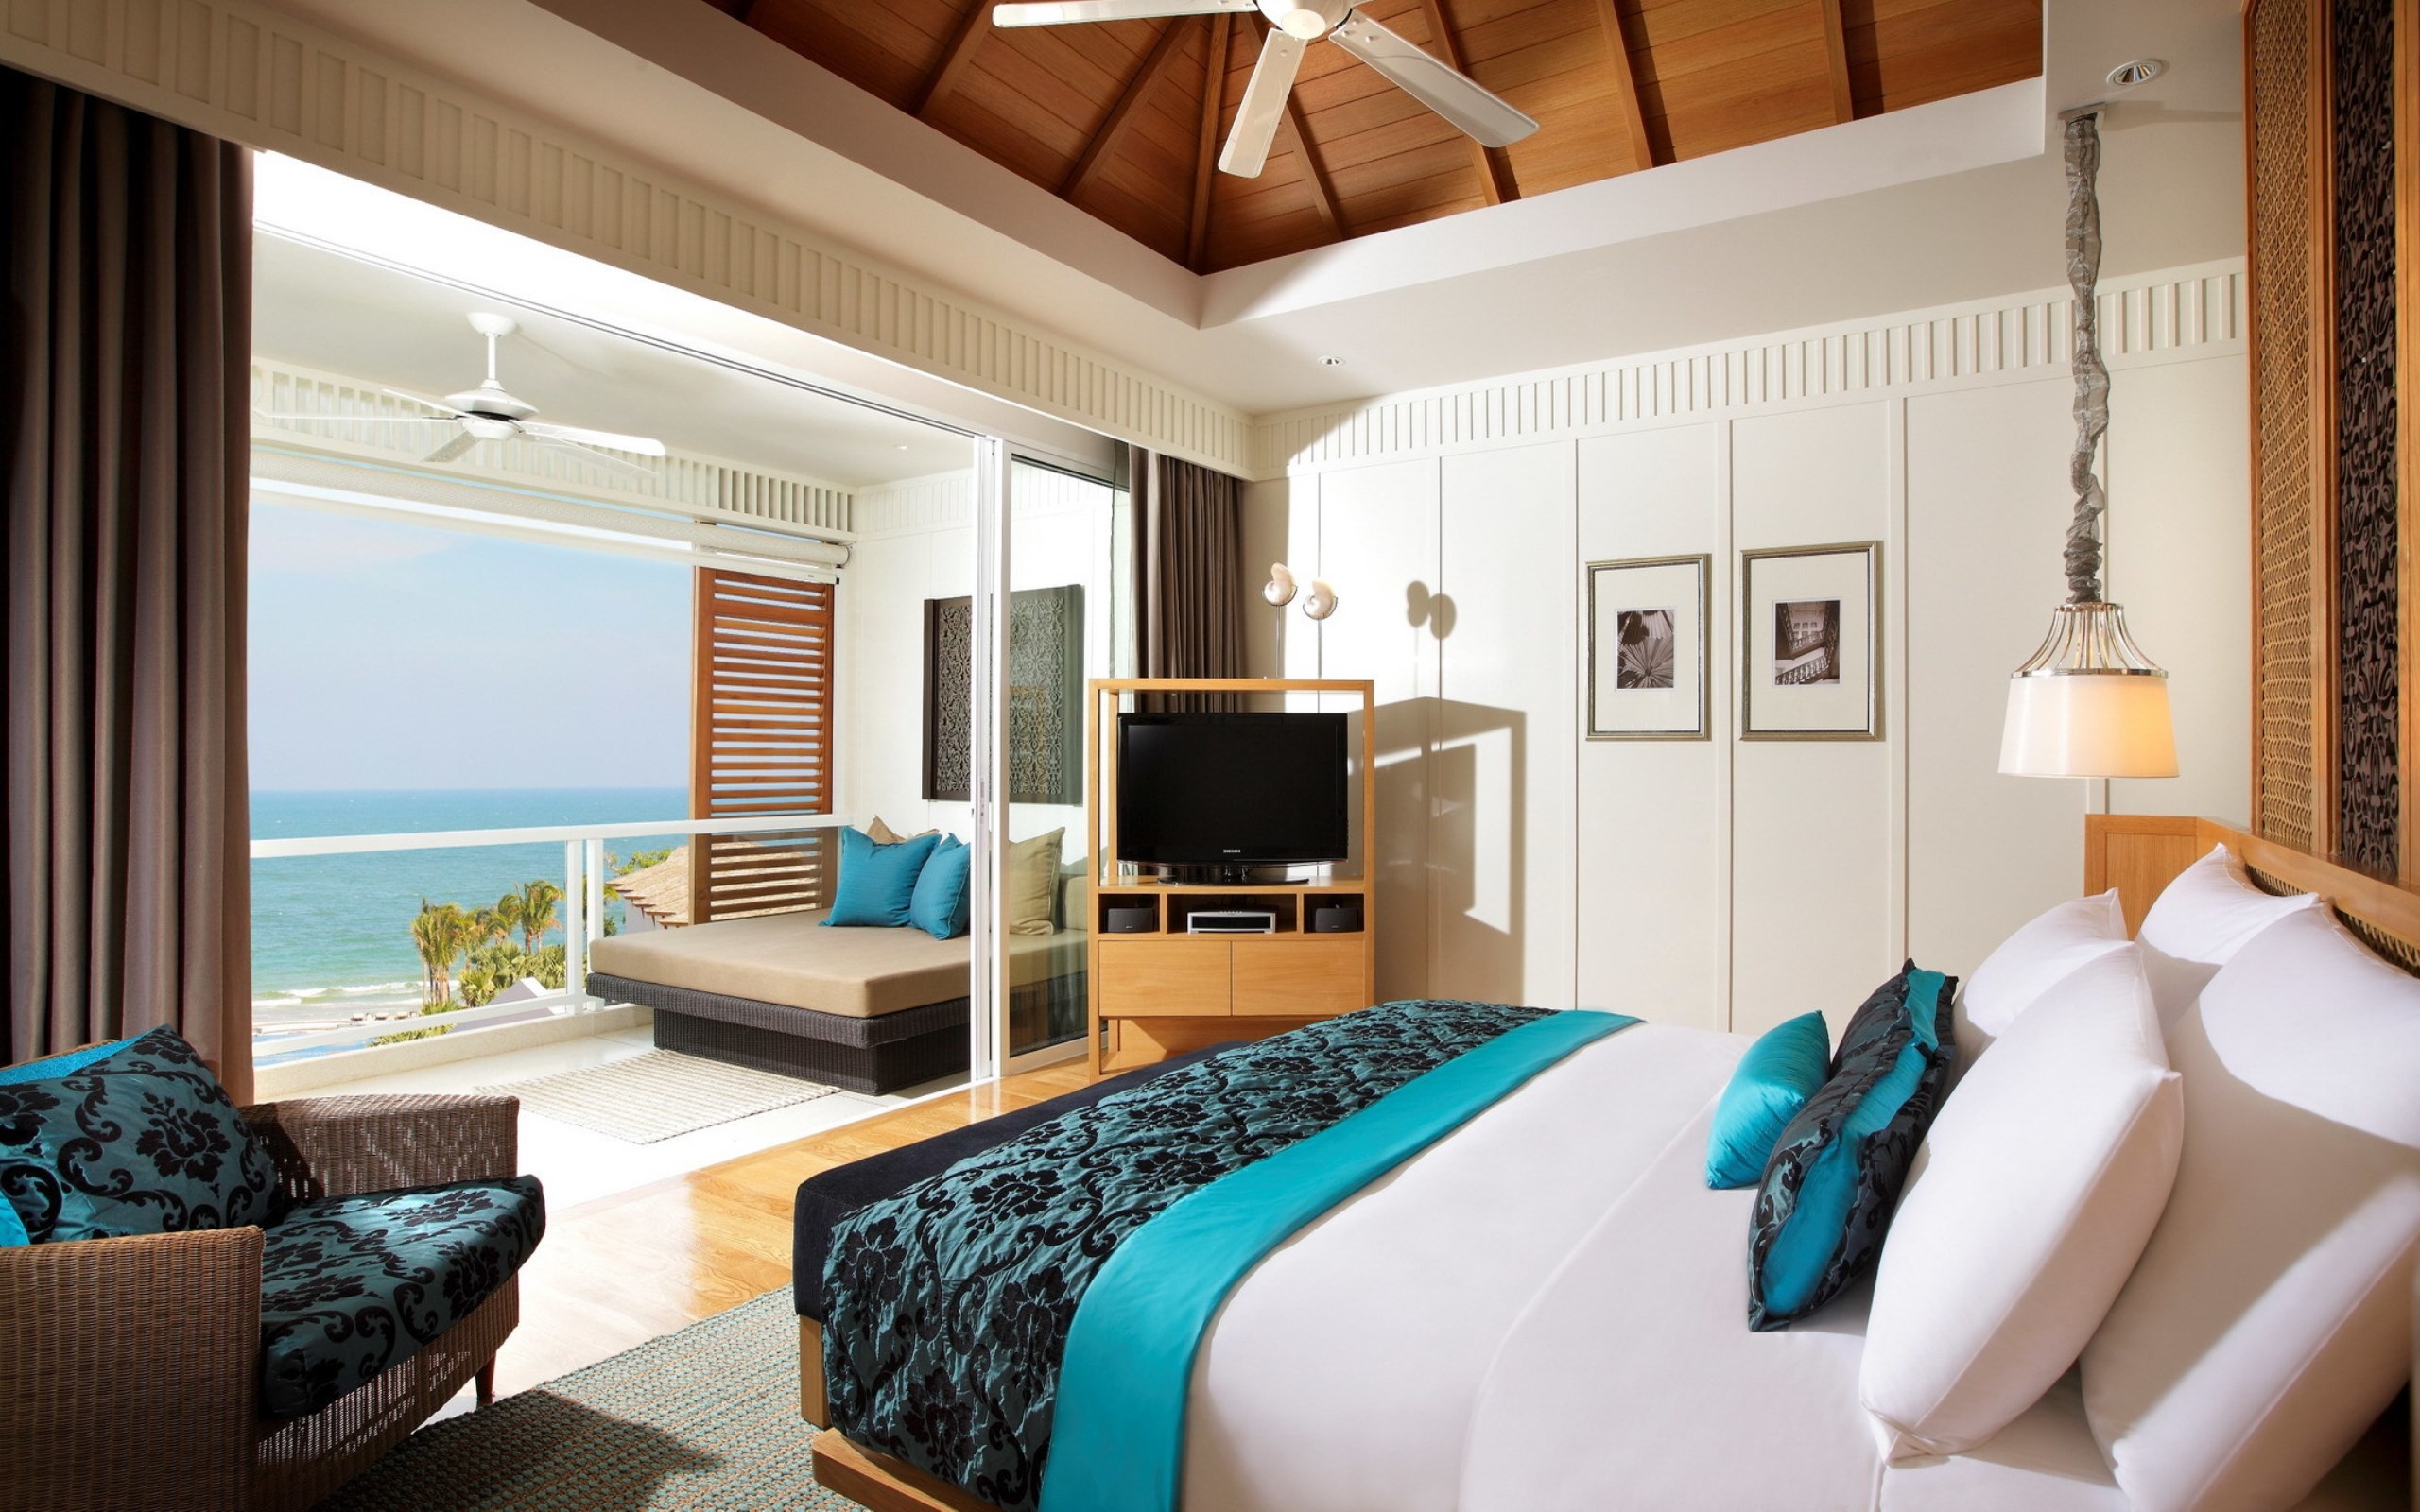 General 2560x1600 water bed interior room sea TV bedroom